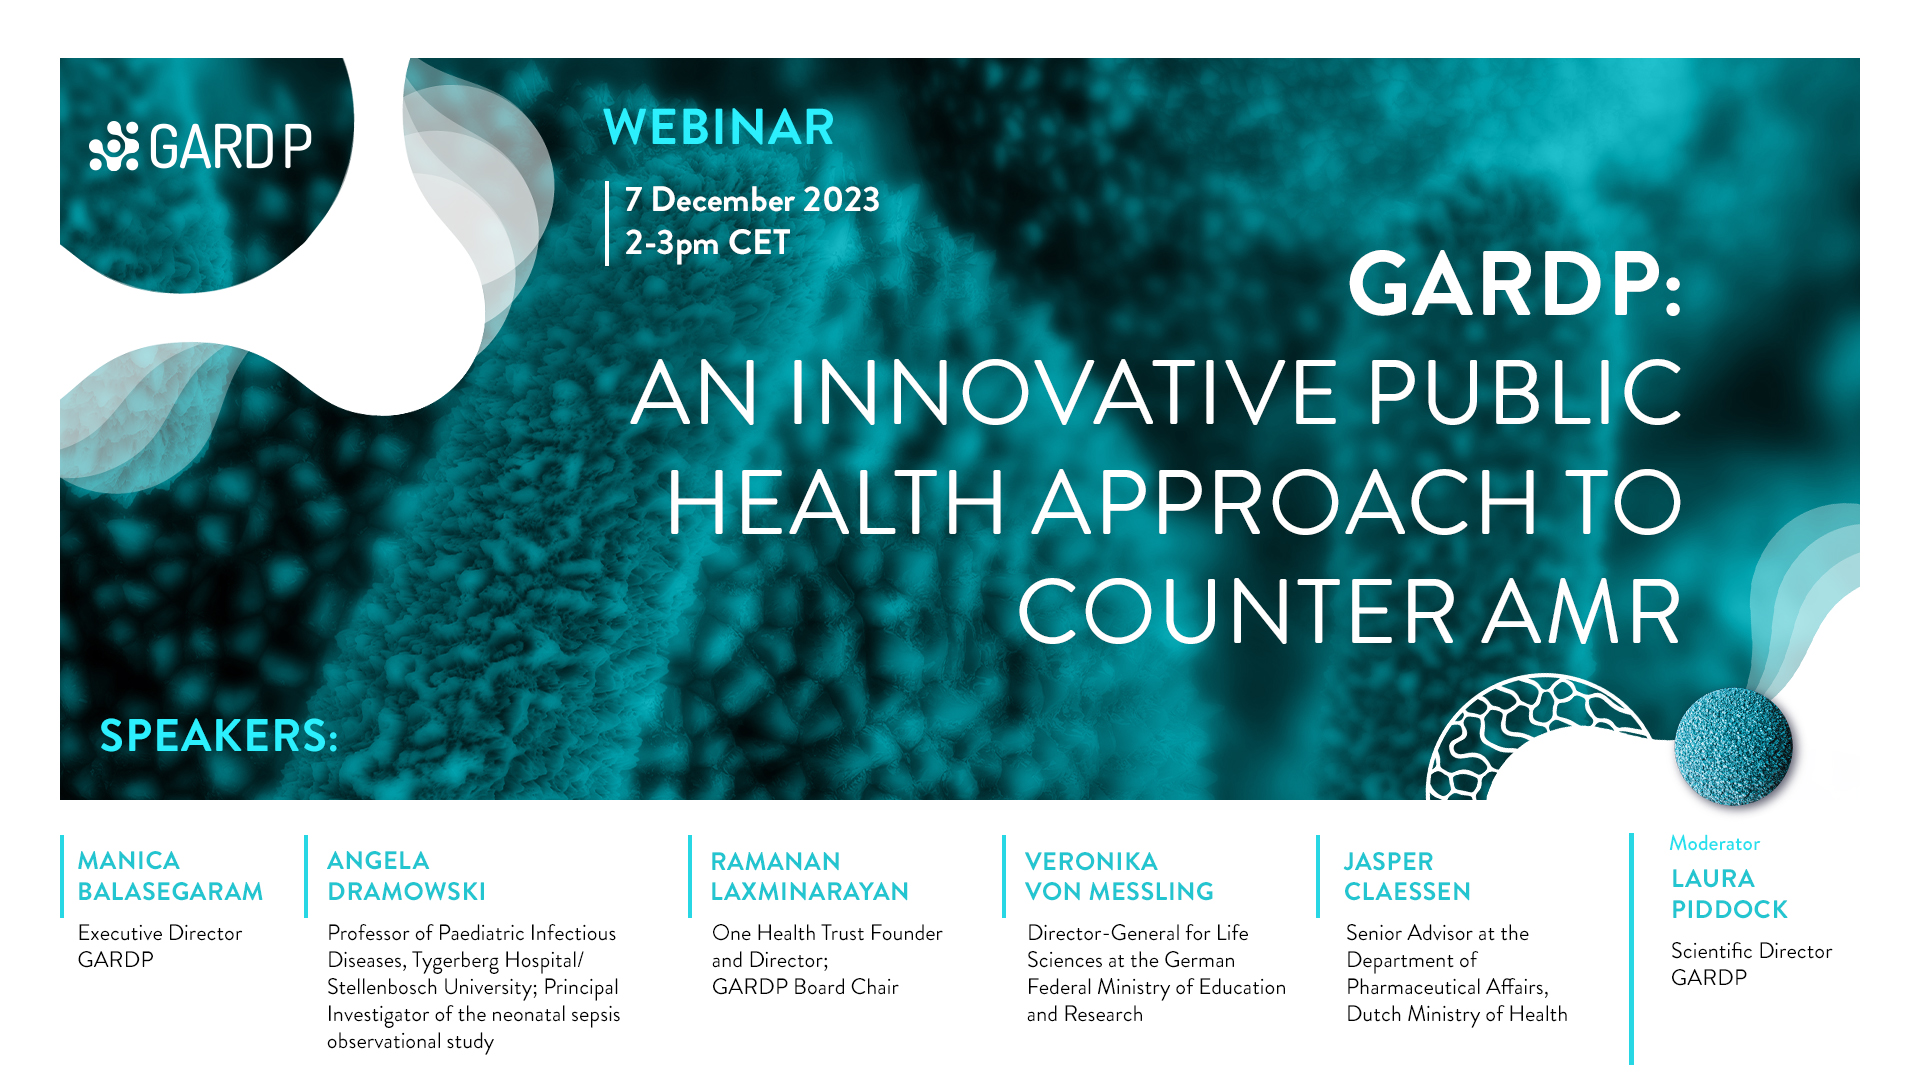 GARDP: An innovative public health approach to counter AMR